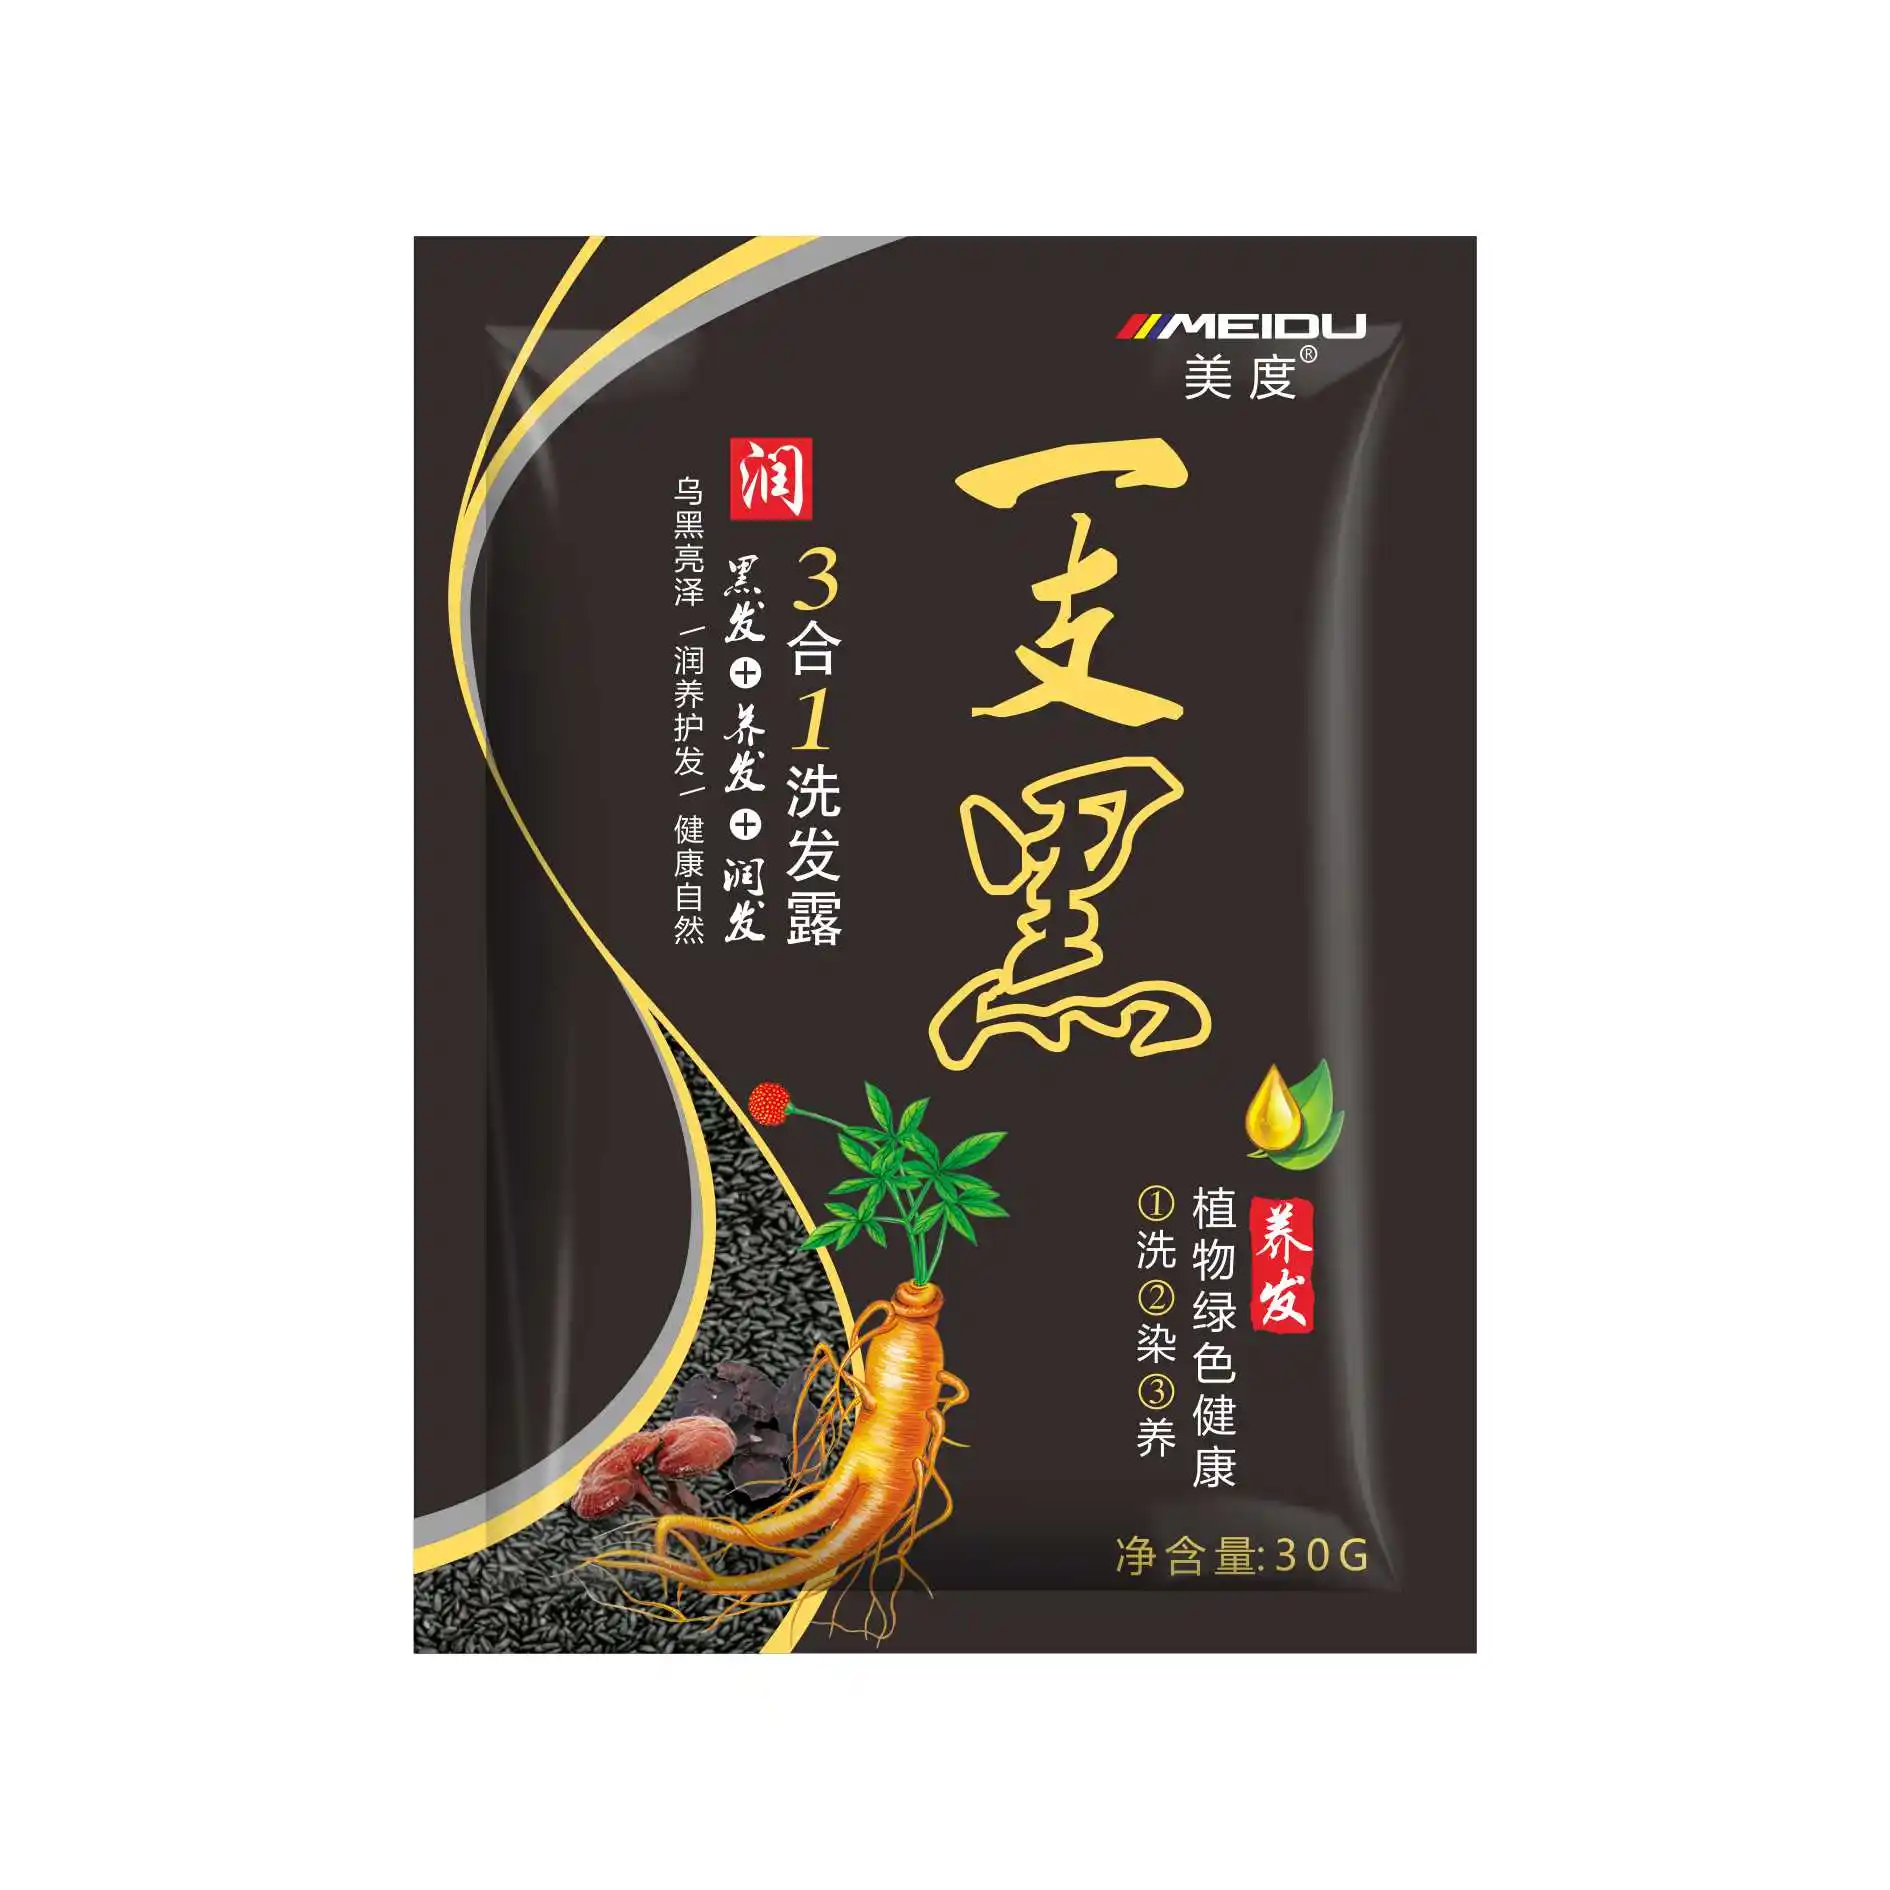 MEIDU hot sale manufacturer permanent natural brown beauty black hair dye shampoo in 30gm sachet